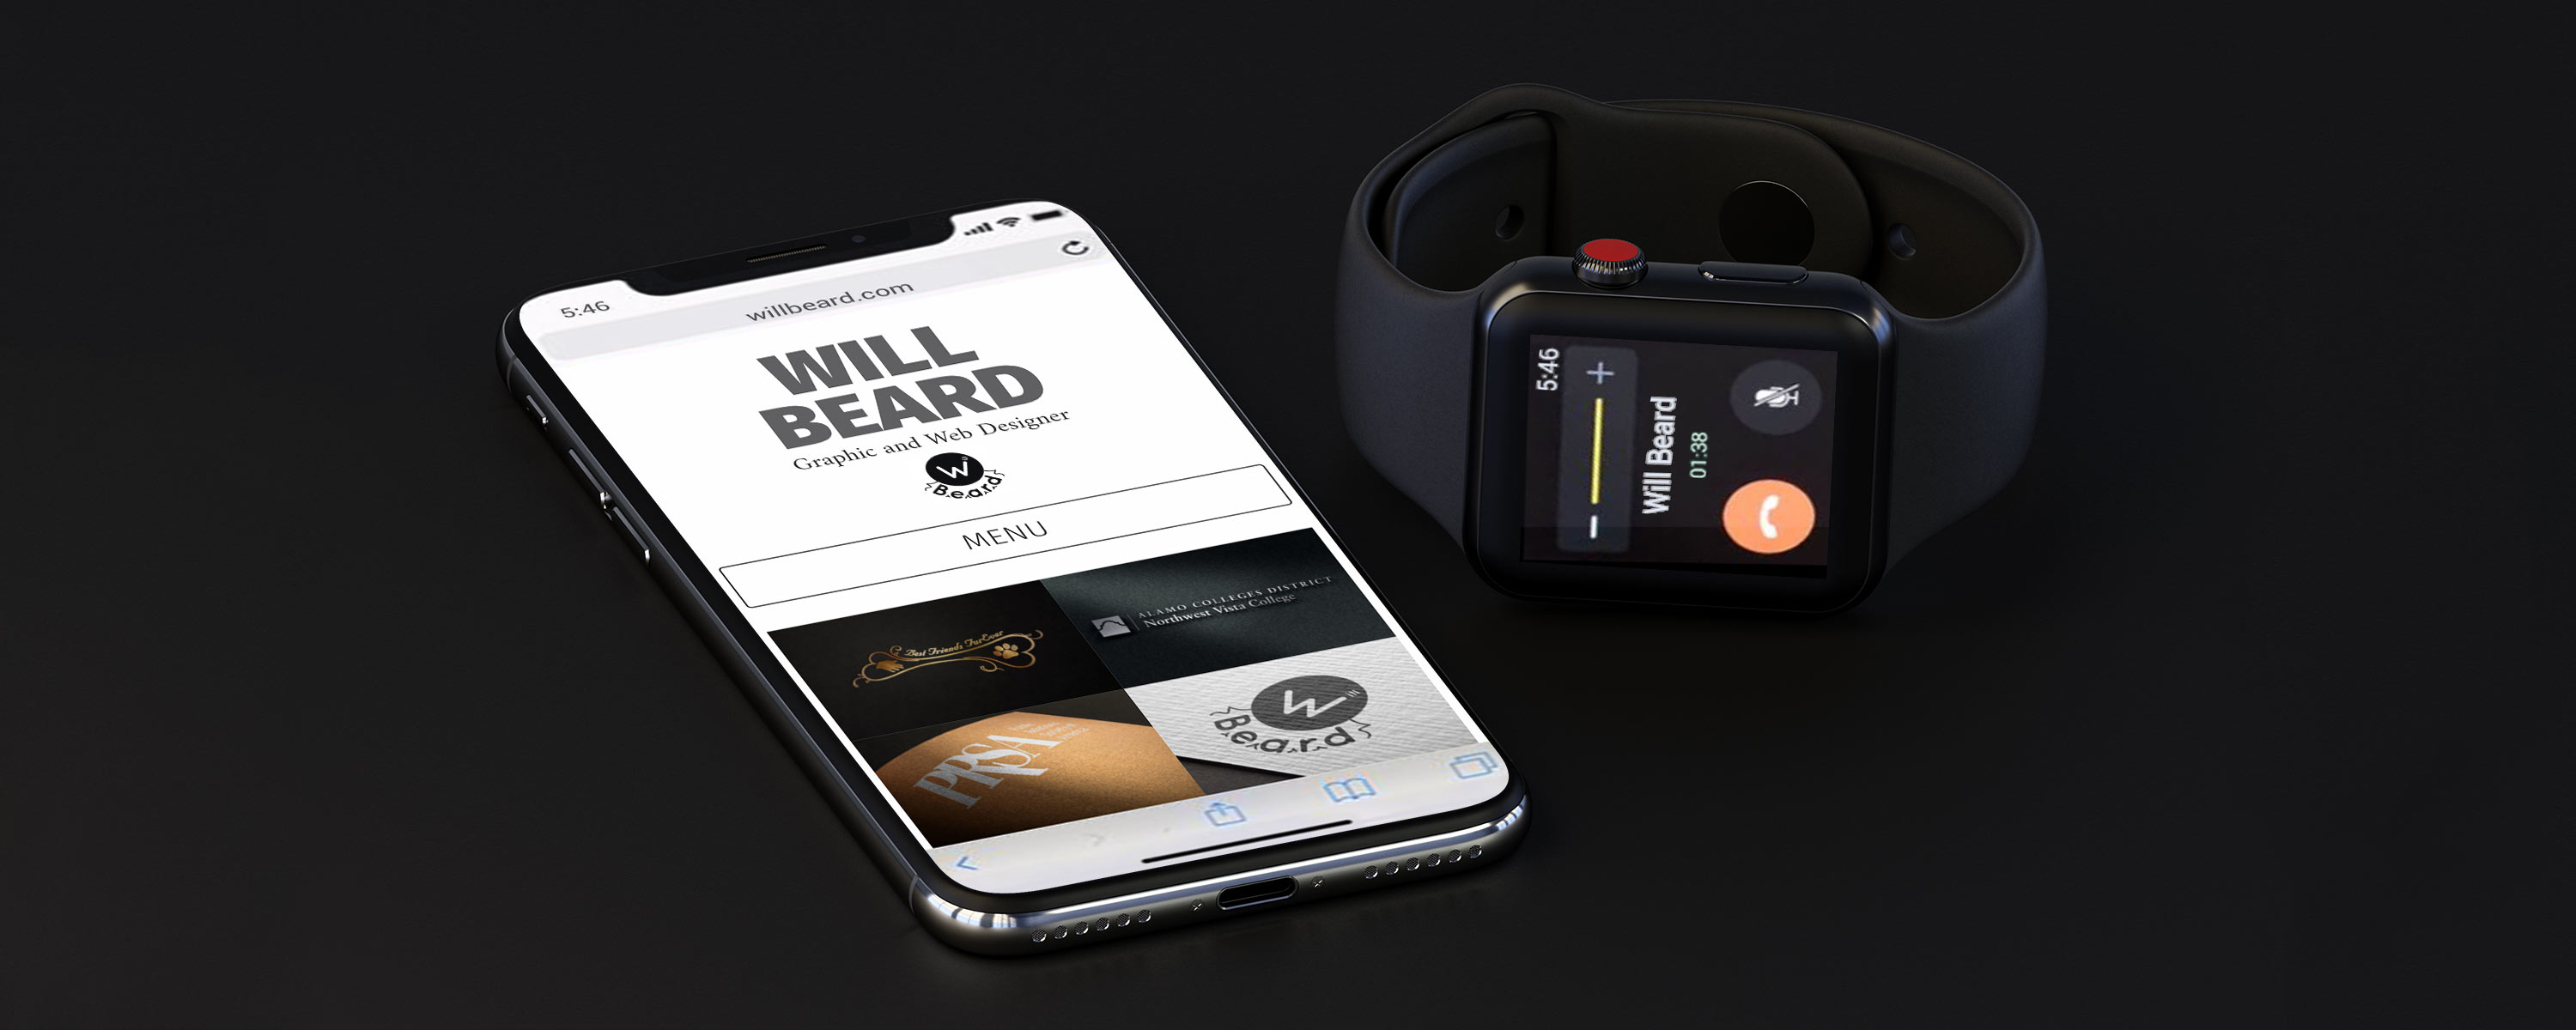 Will Beard website on iPhone X and  Will Beard on Apple Watch